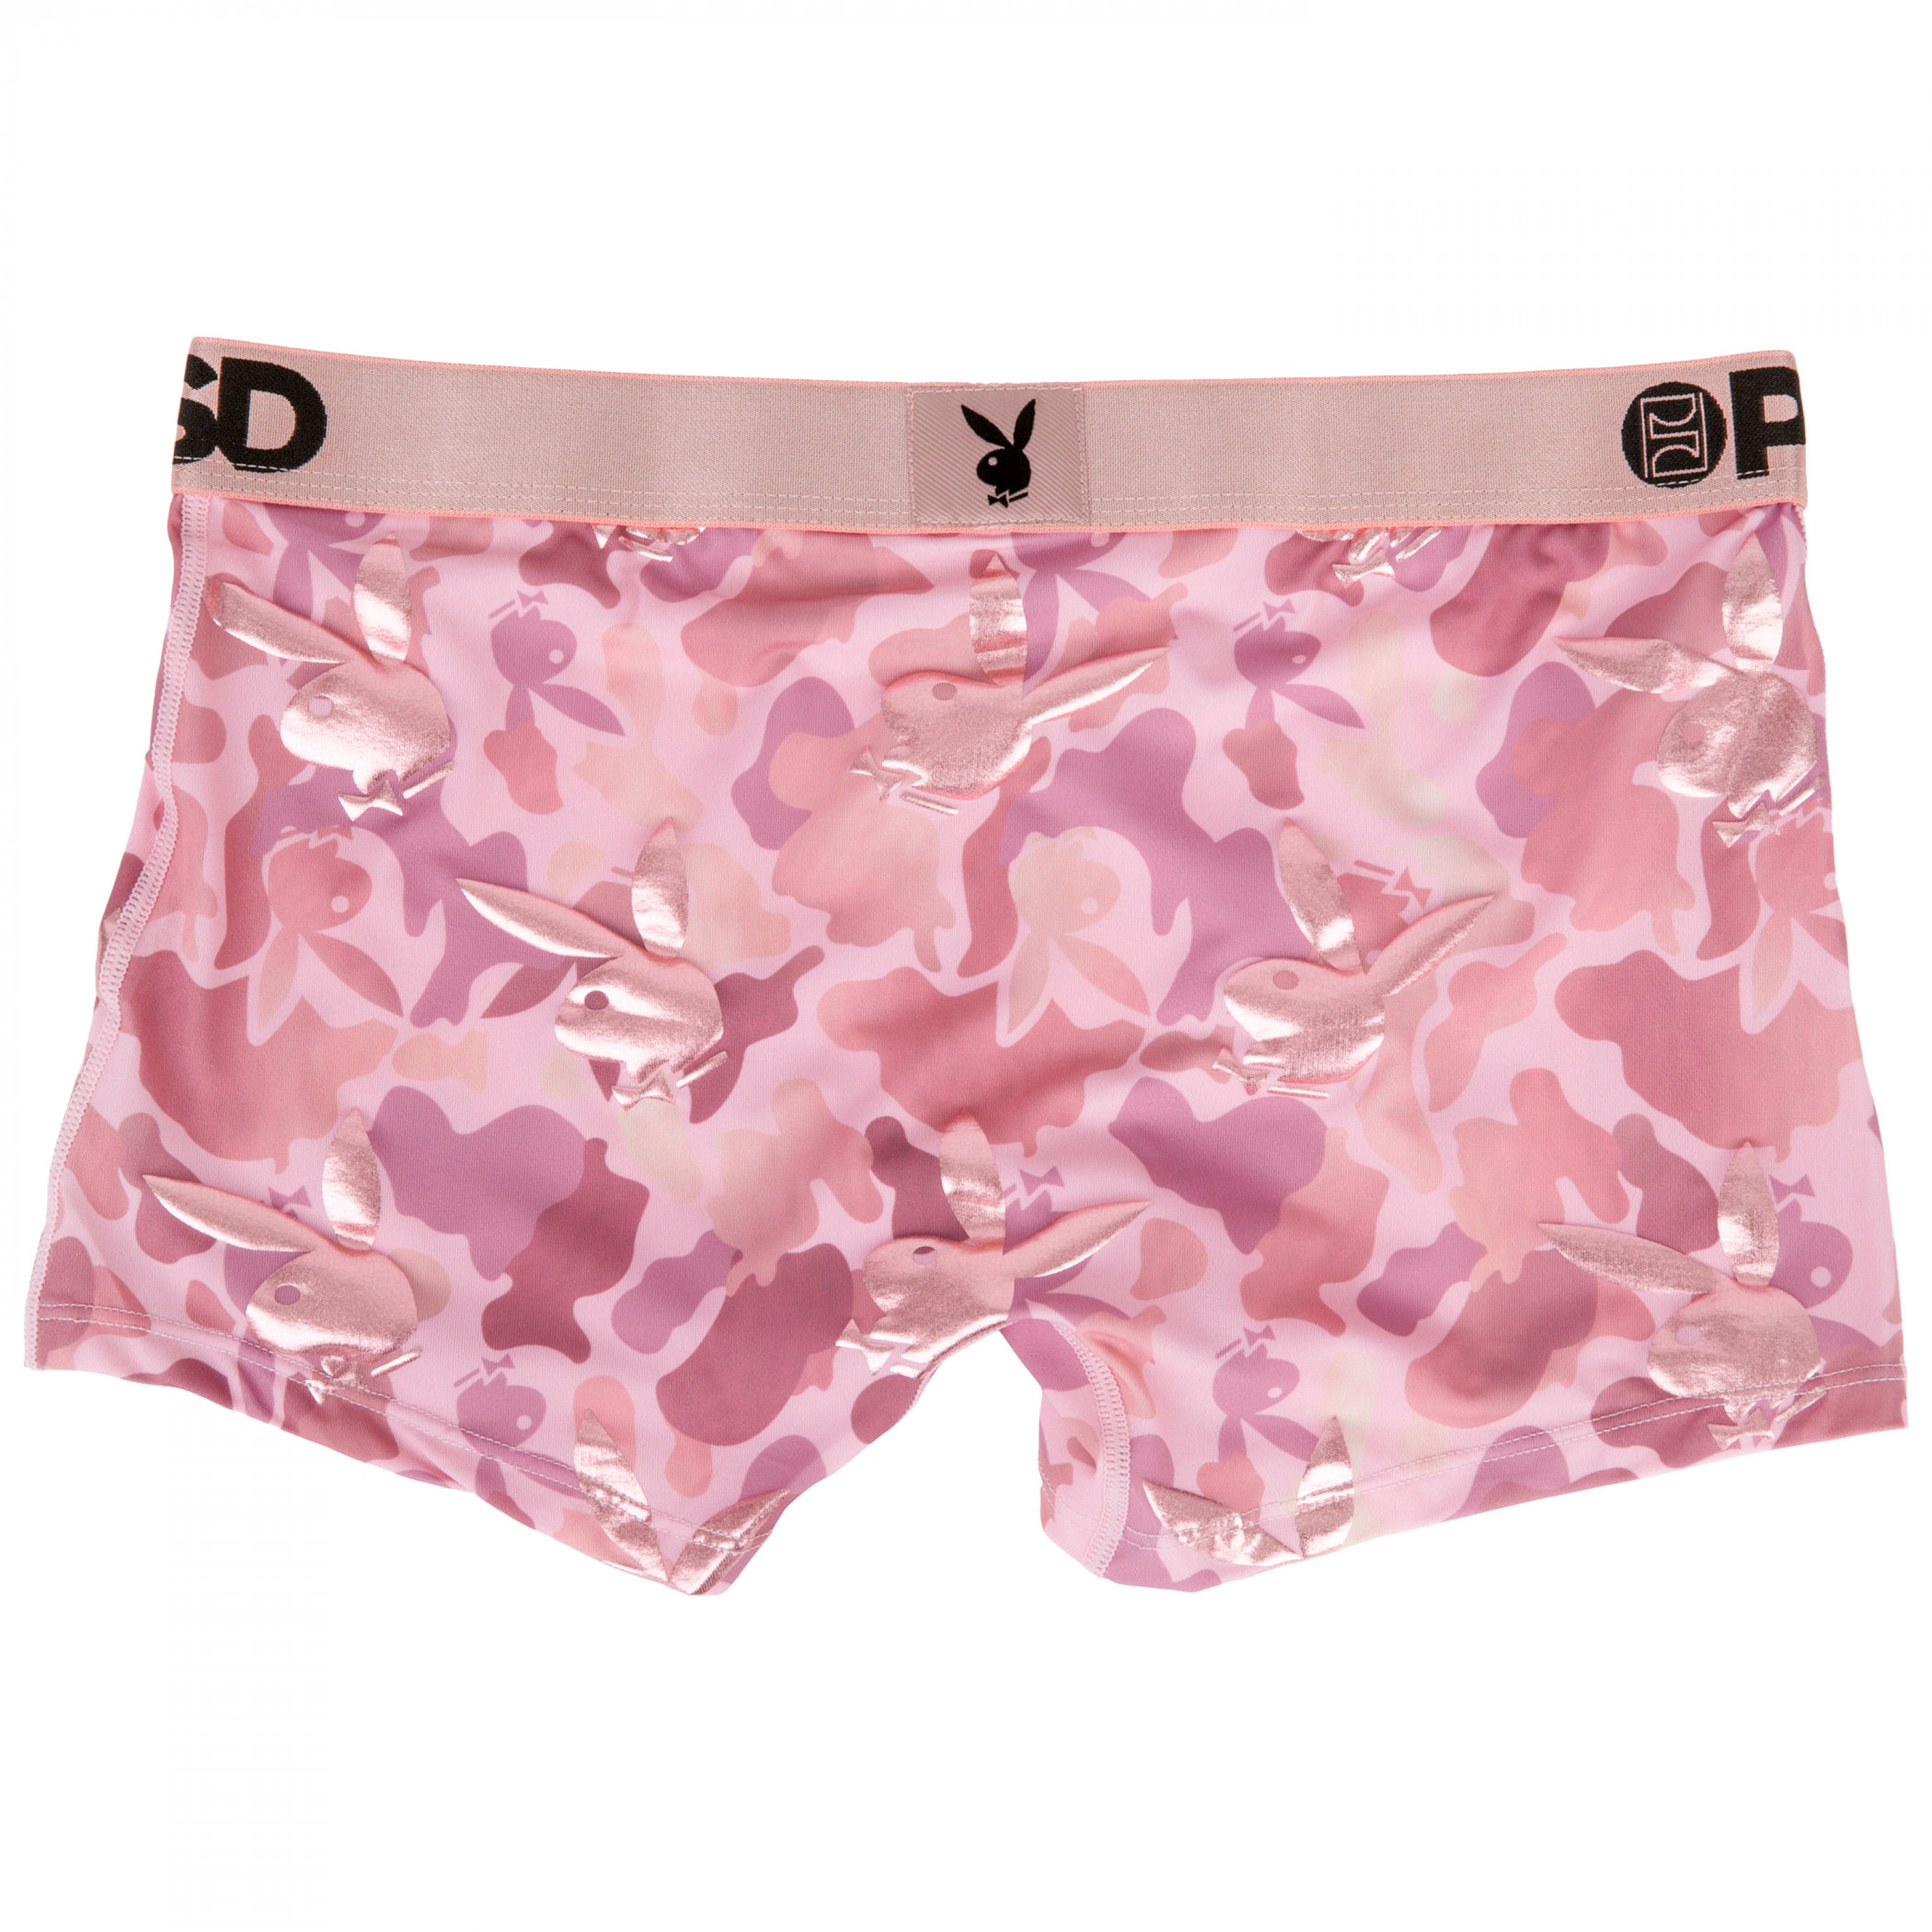 Playboy Rose Gold Bunny PSD Boy Shorts Underwear